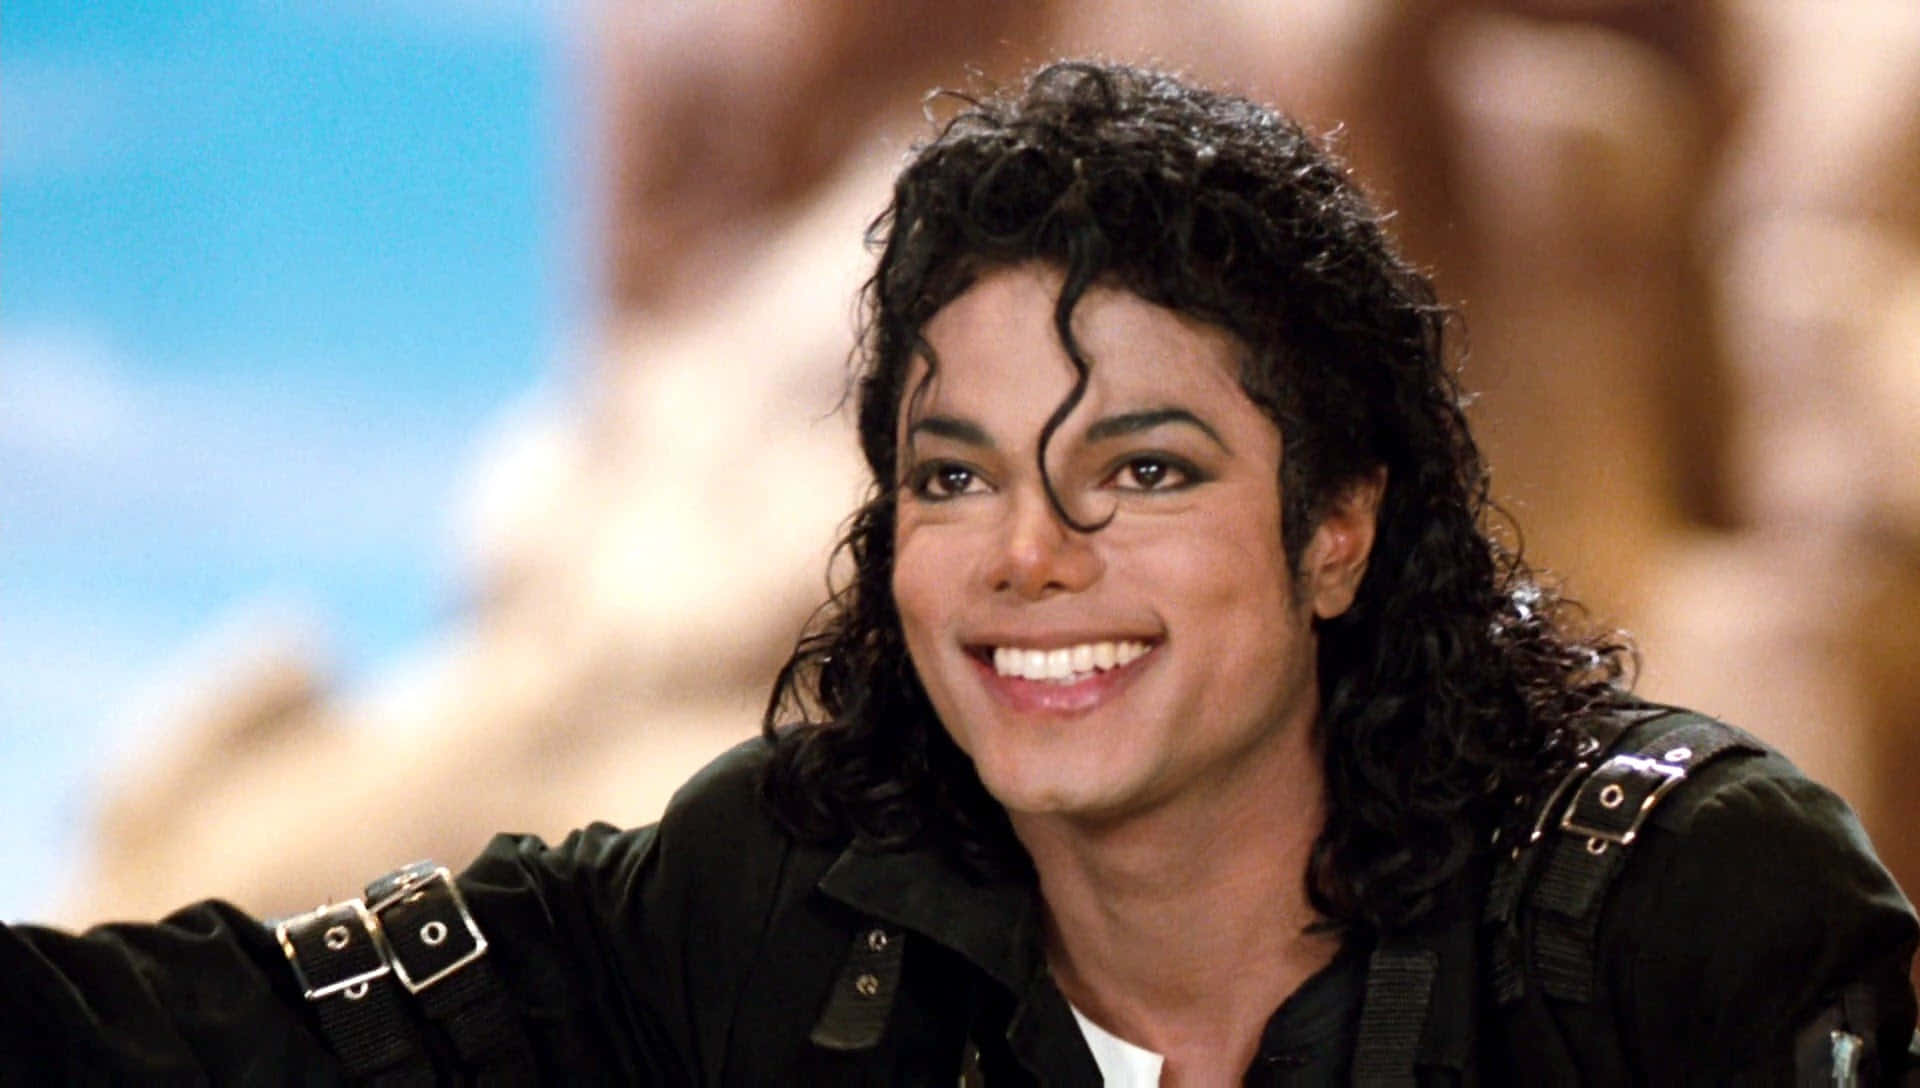 Holensie Sich Musik In Die Handfläche Mit Michael Jacksons Iphone. Wallpaper